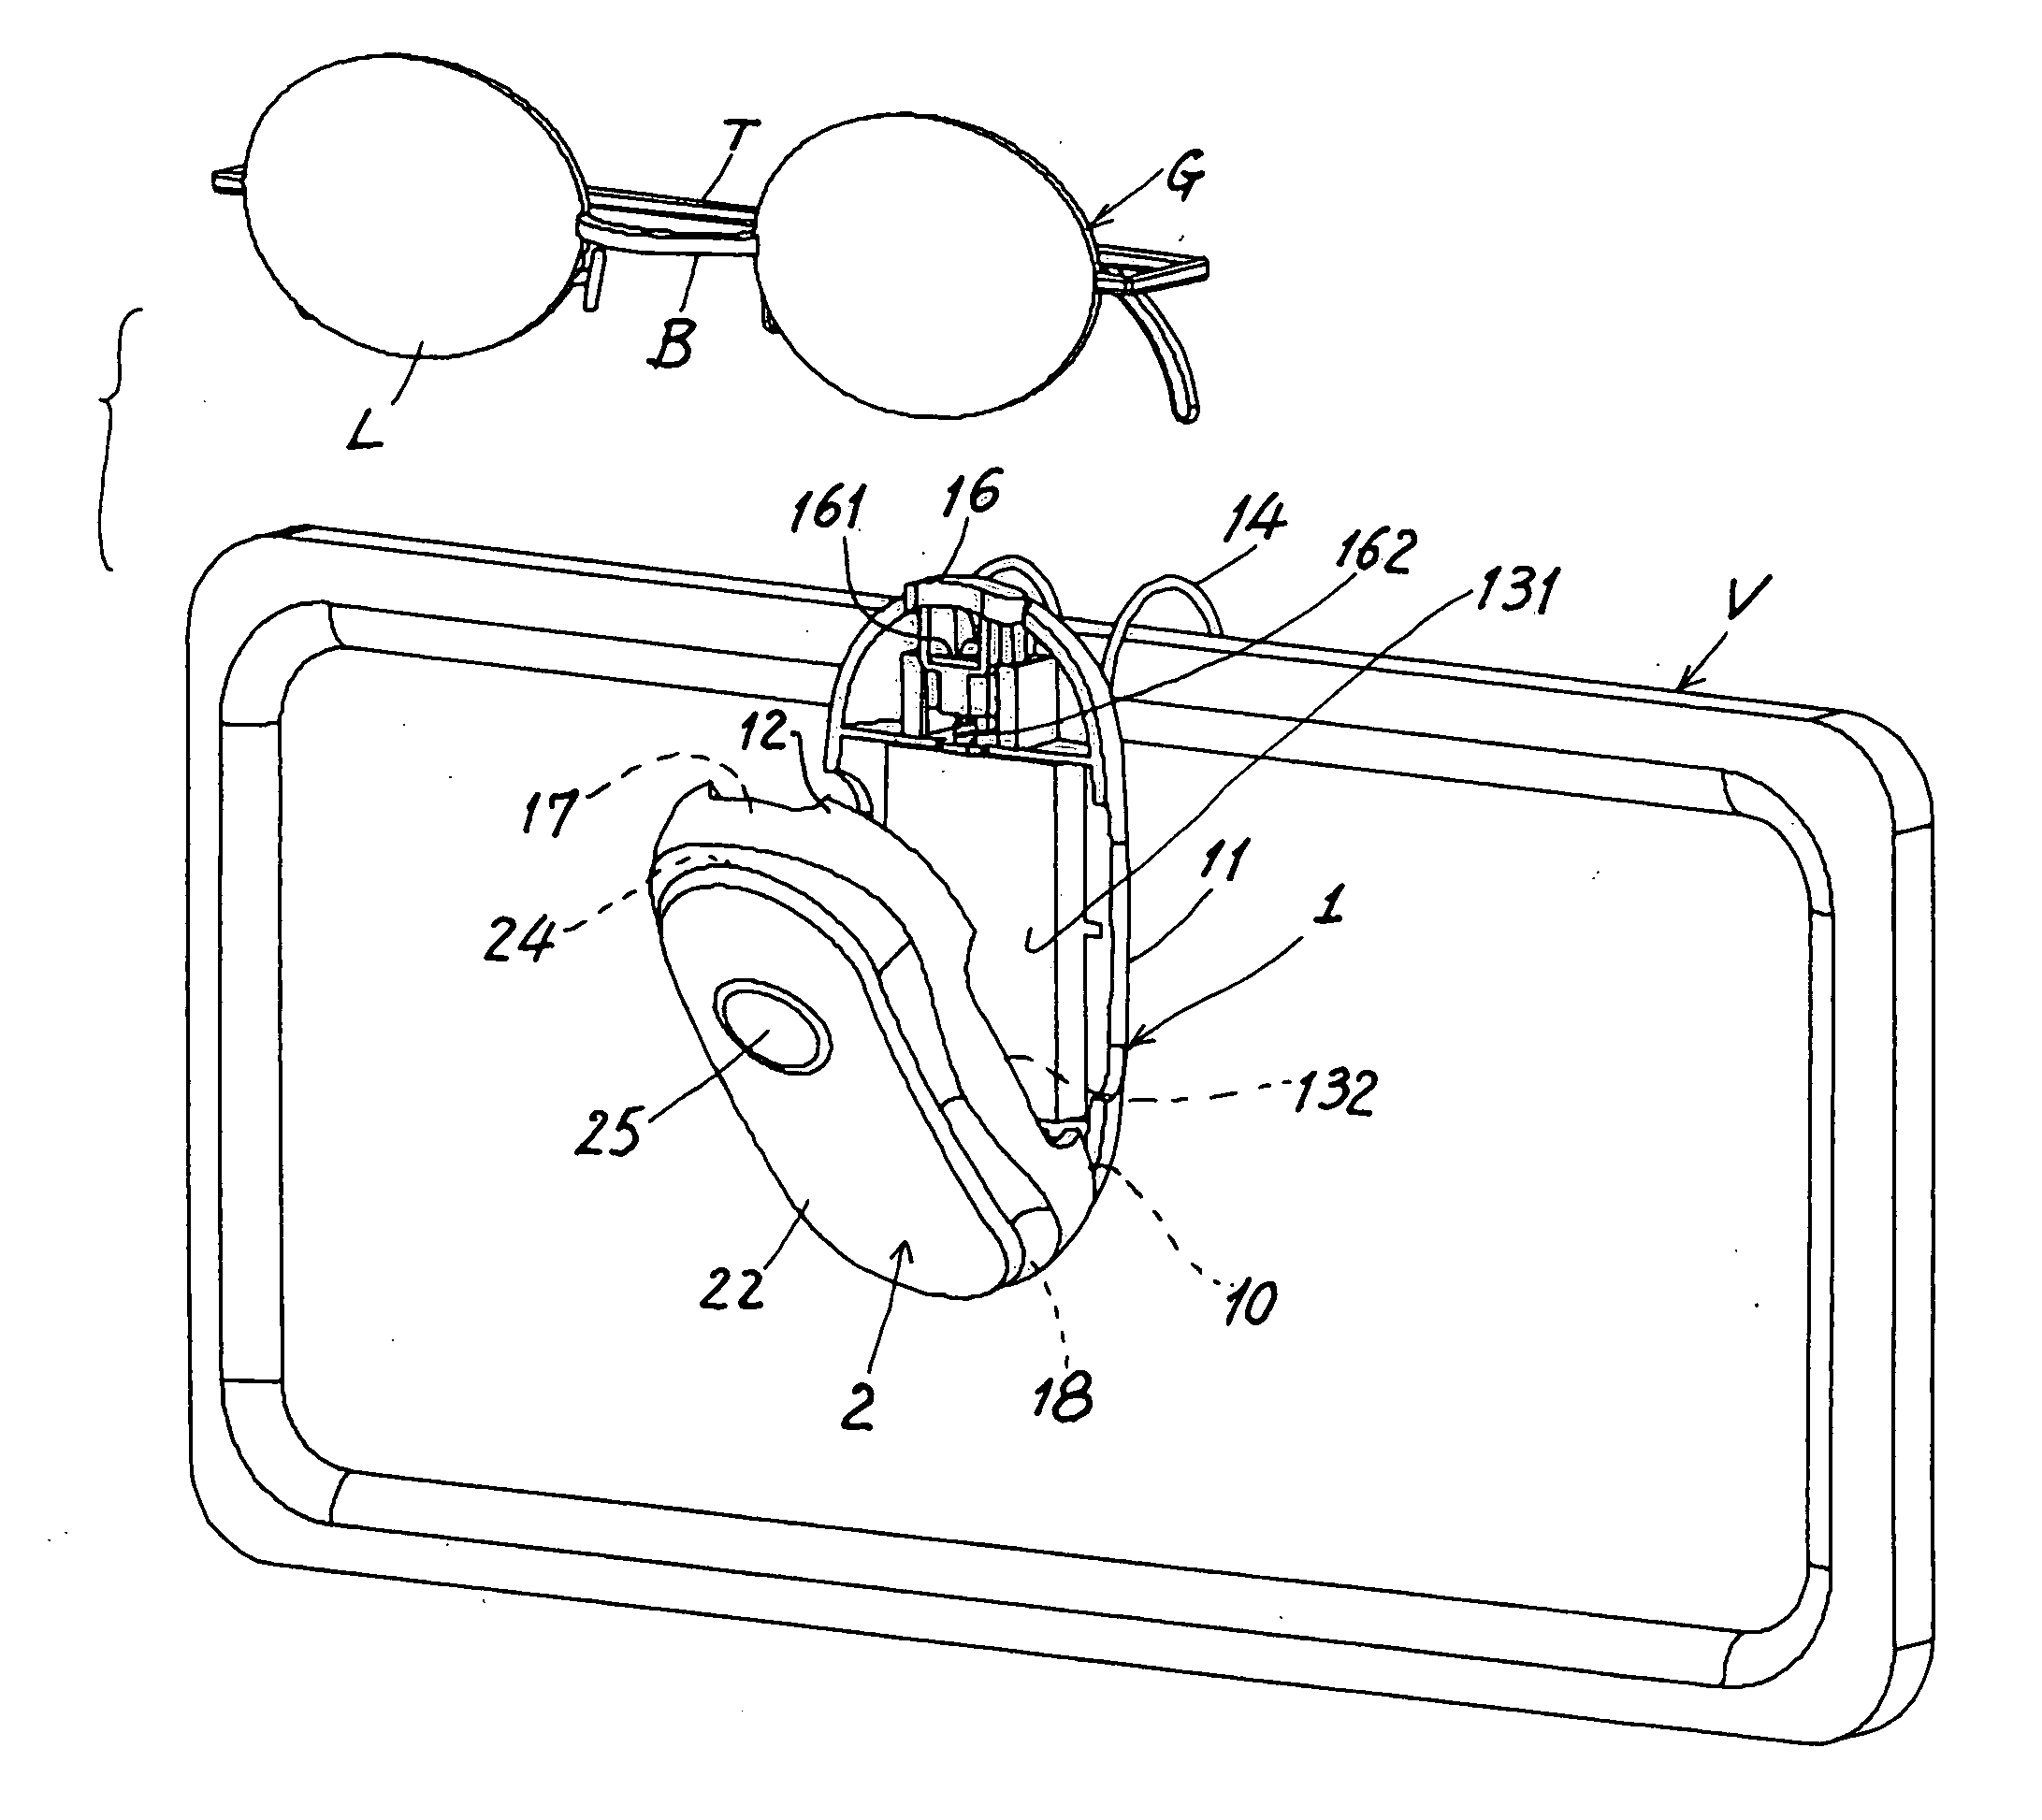 Sunglass holder detachably attached with illuminator